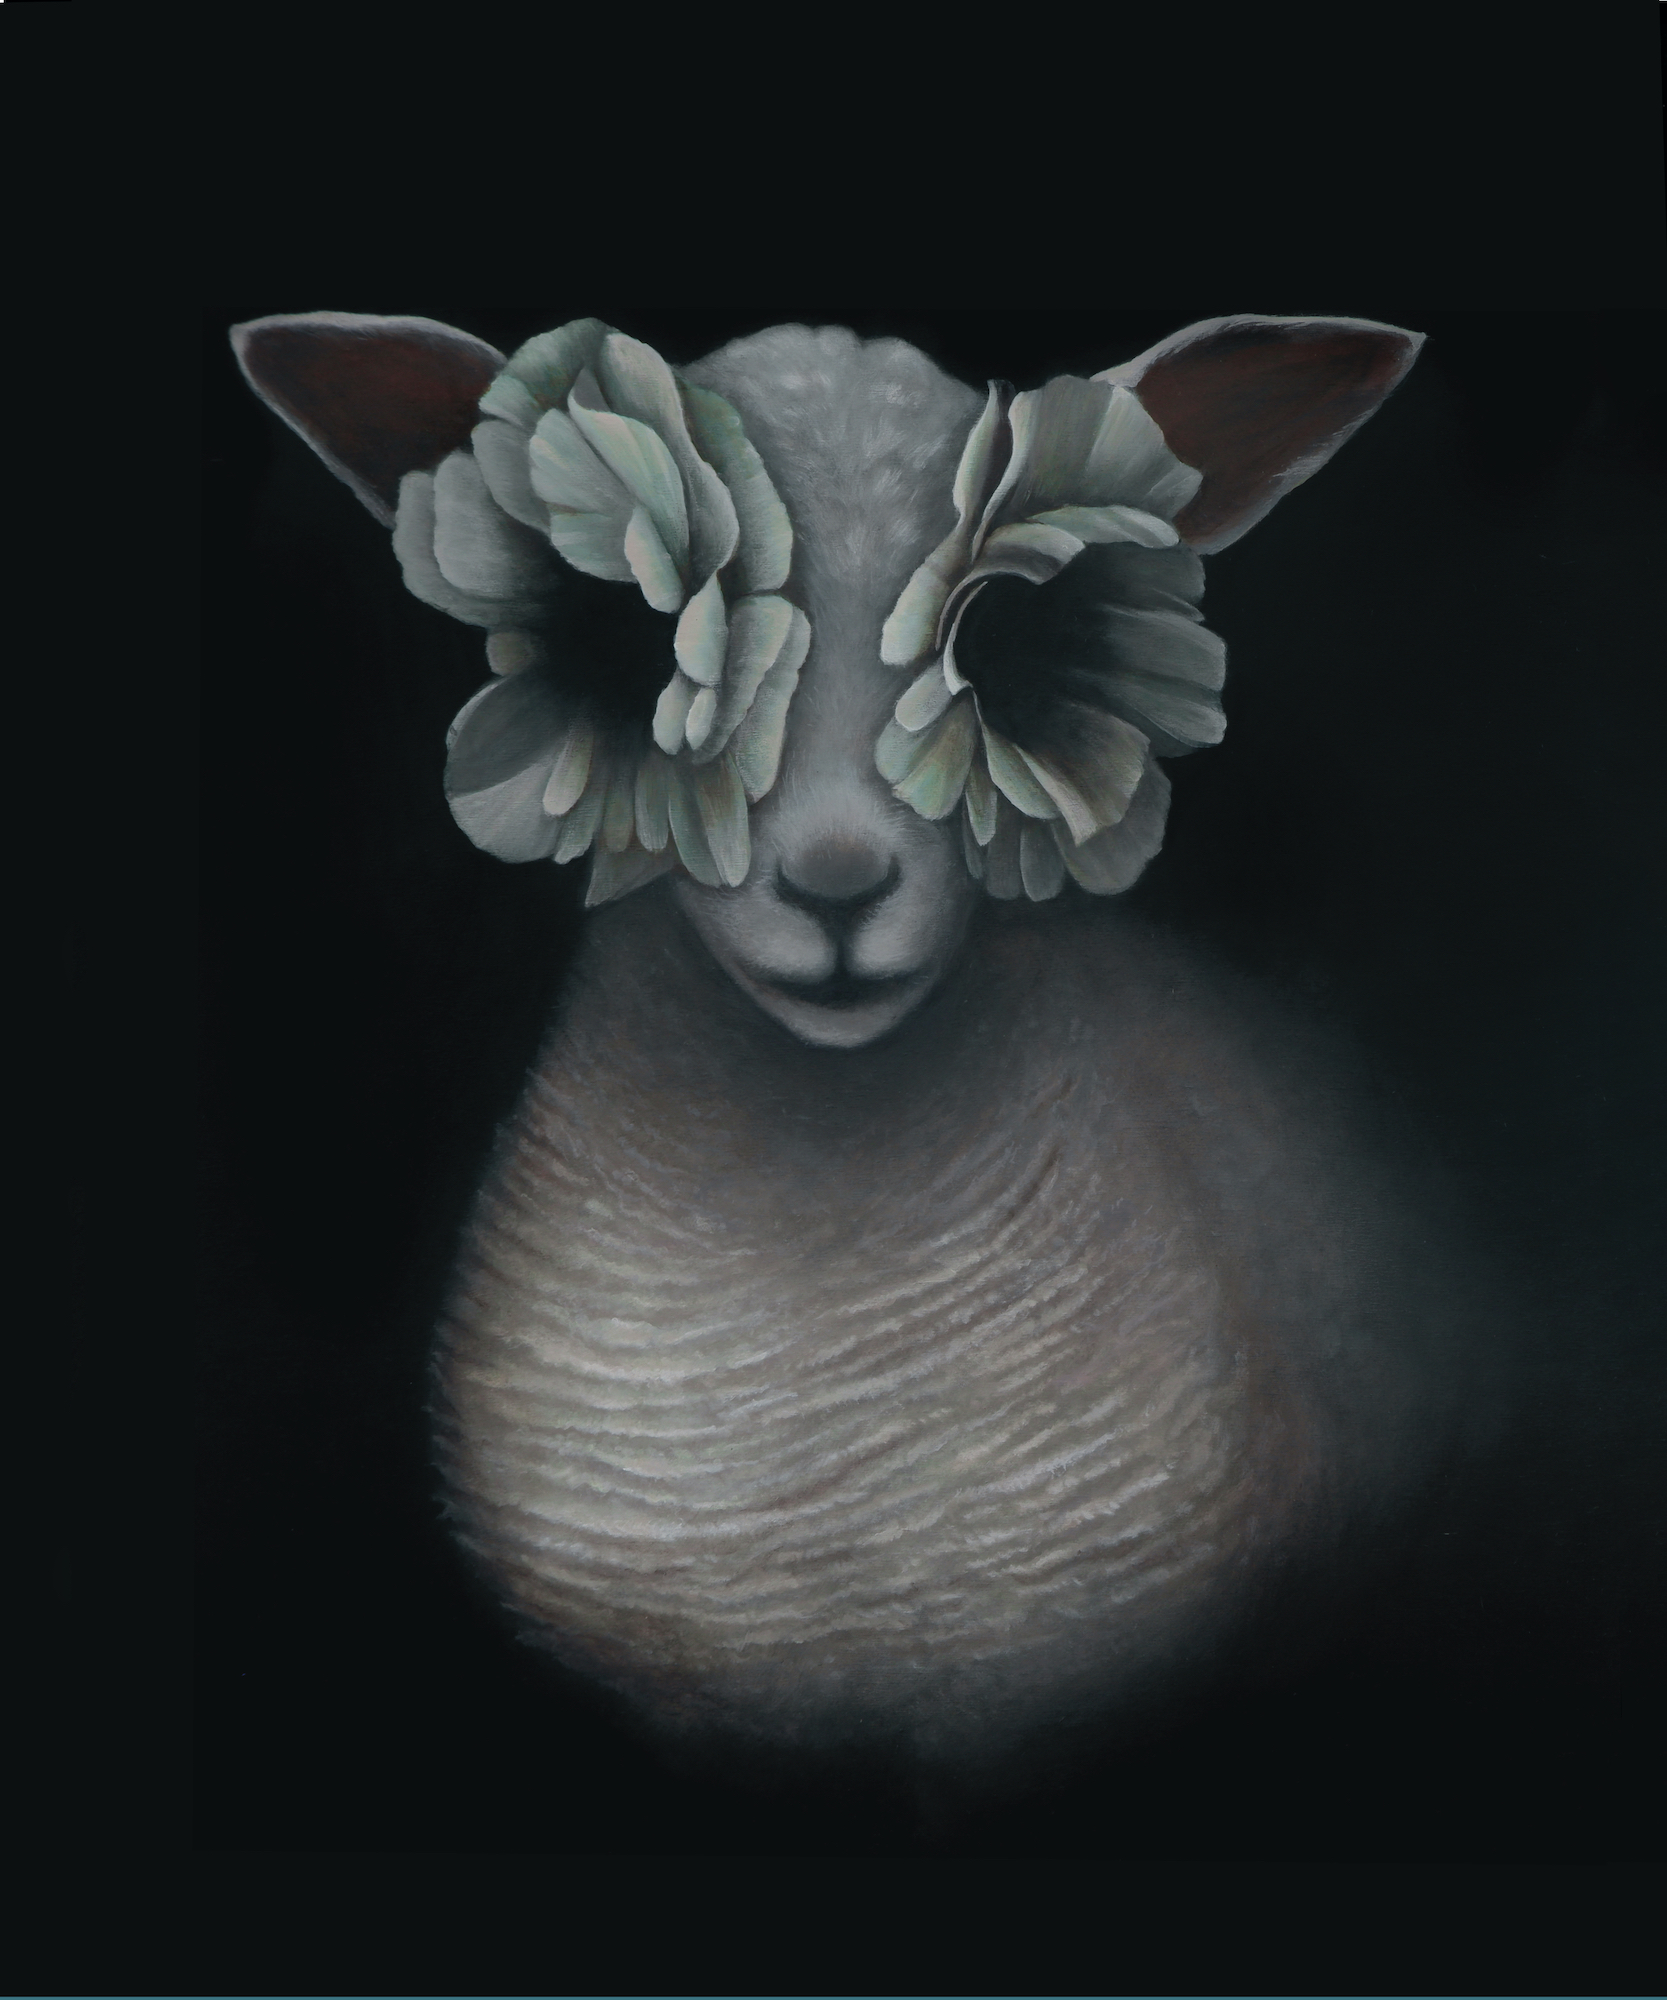 L'agneau dans le noir, 2022, Acrylic on cradled wood panel, 24x20 in